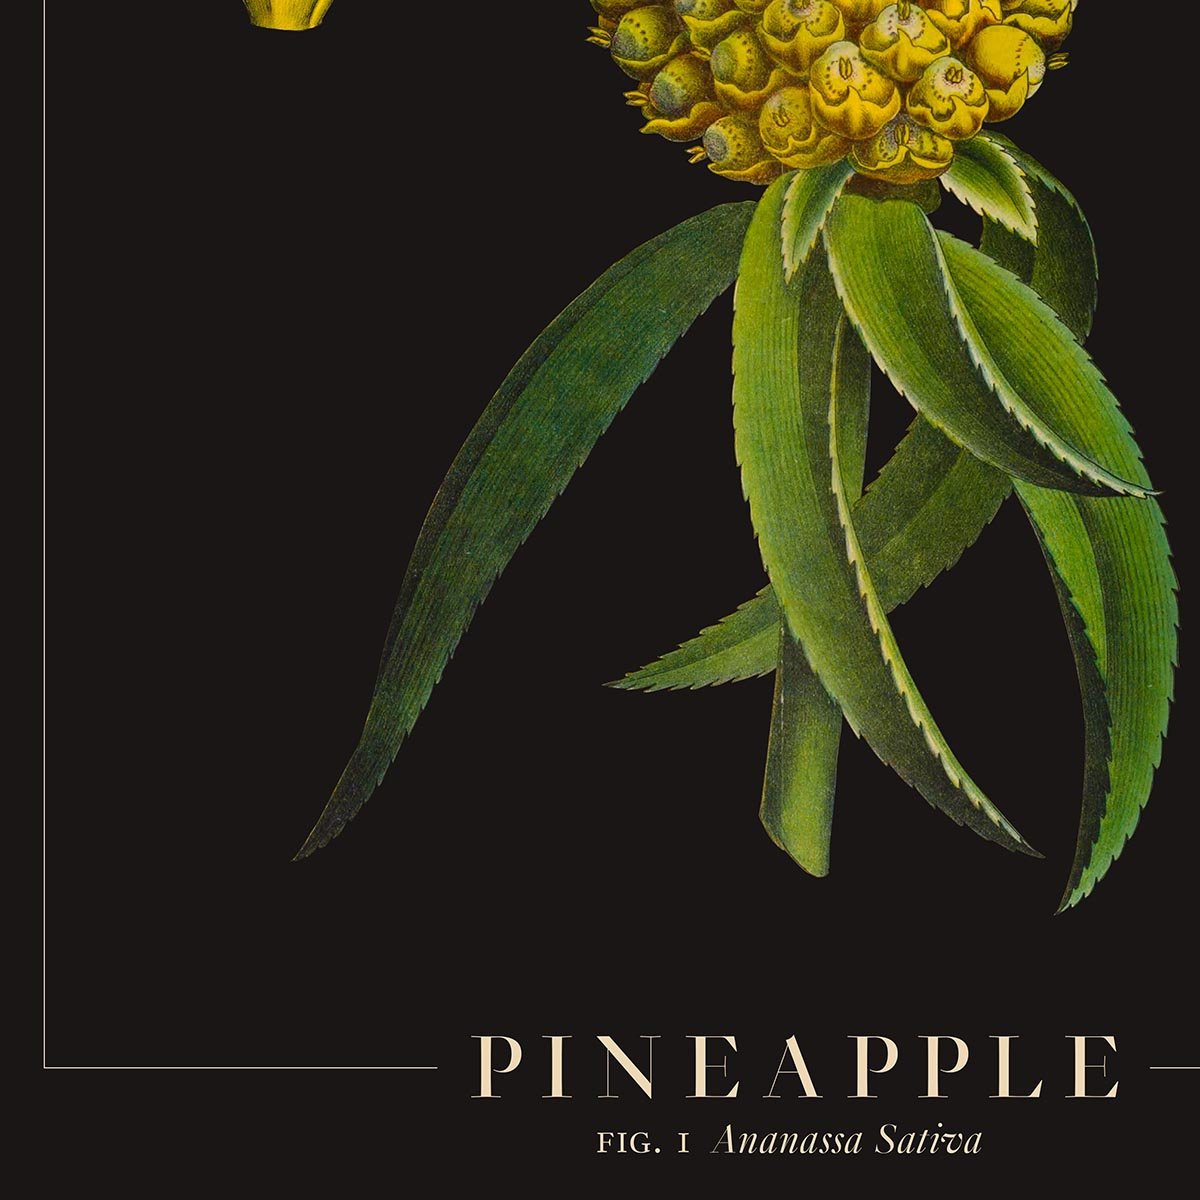 Pineapple Botanical Poster